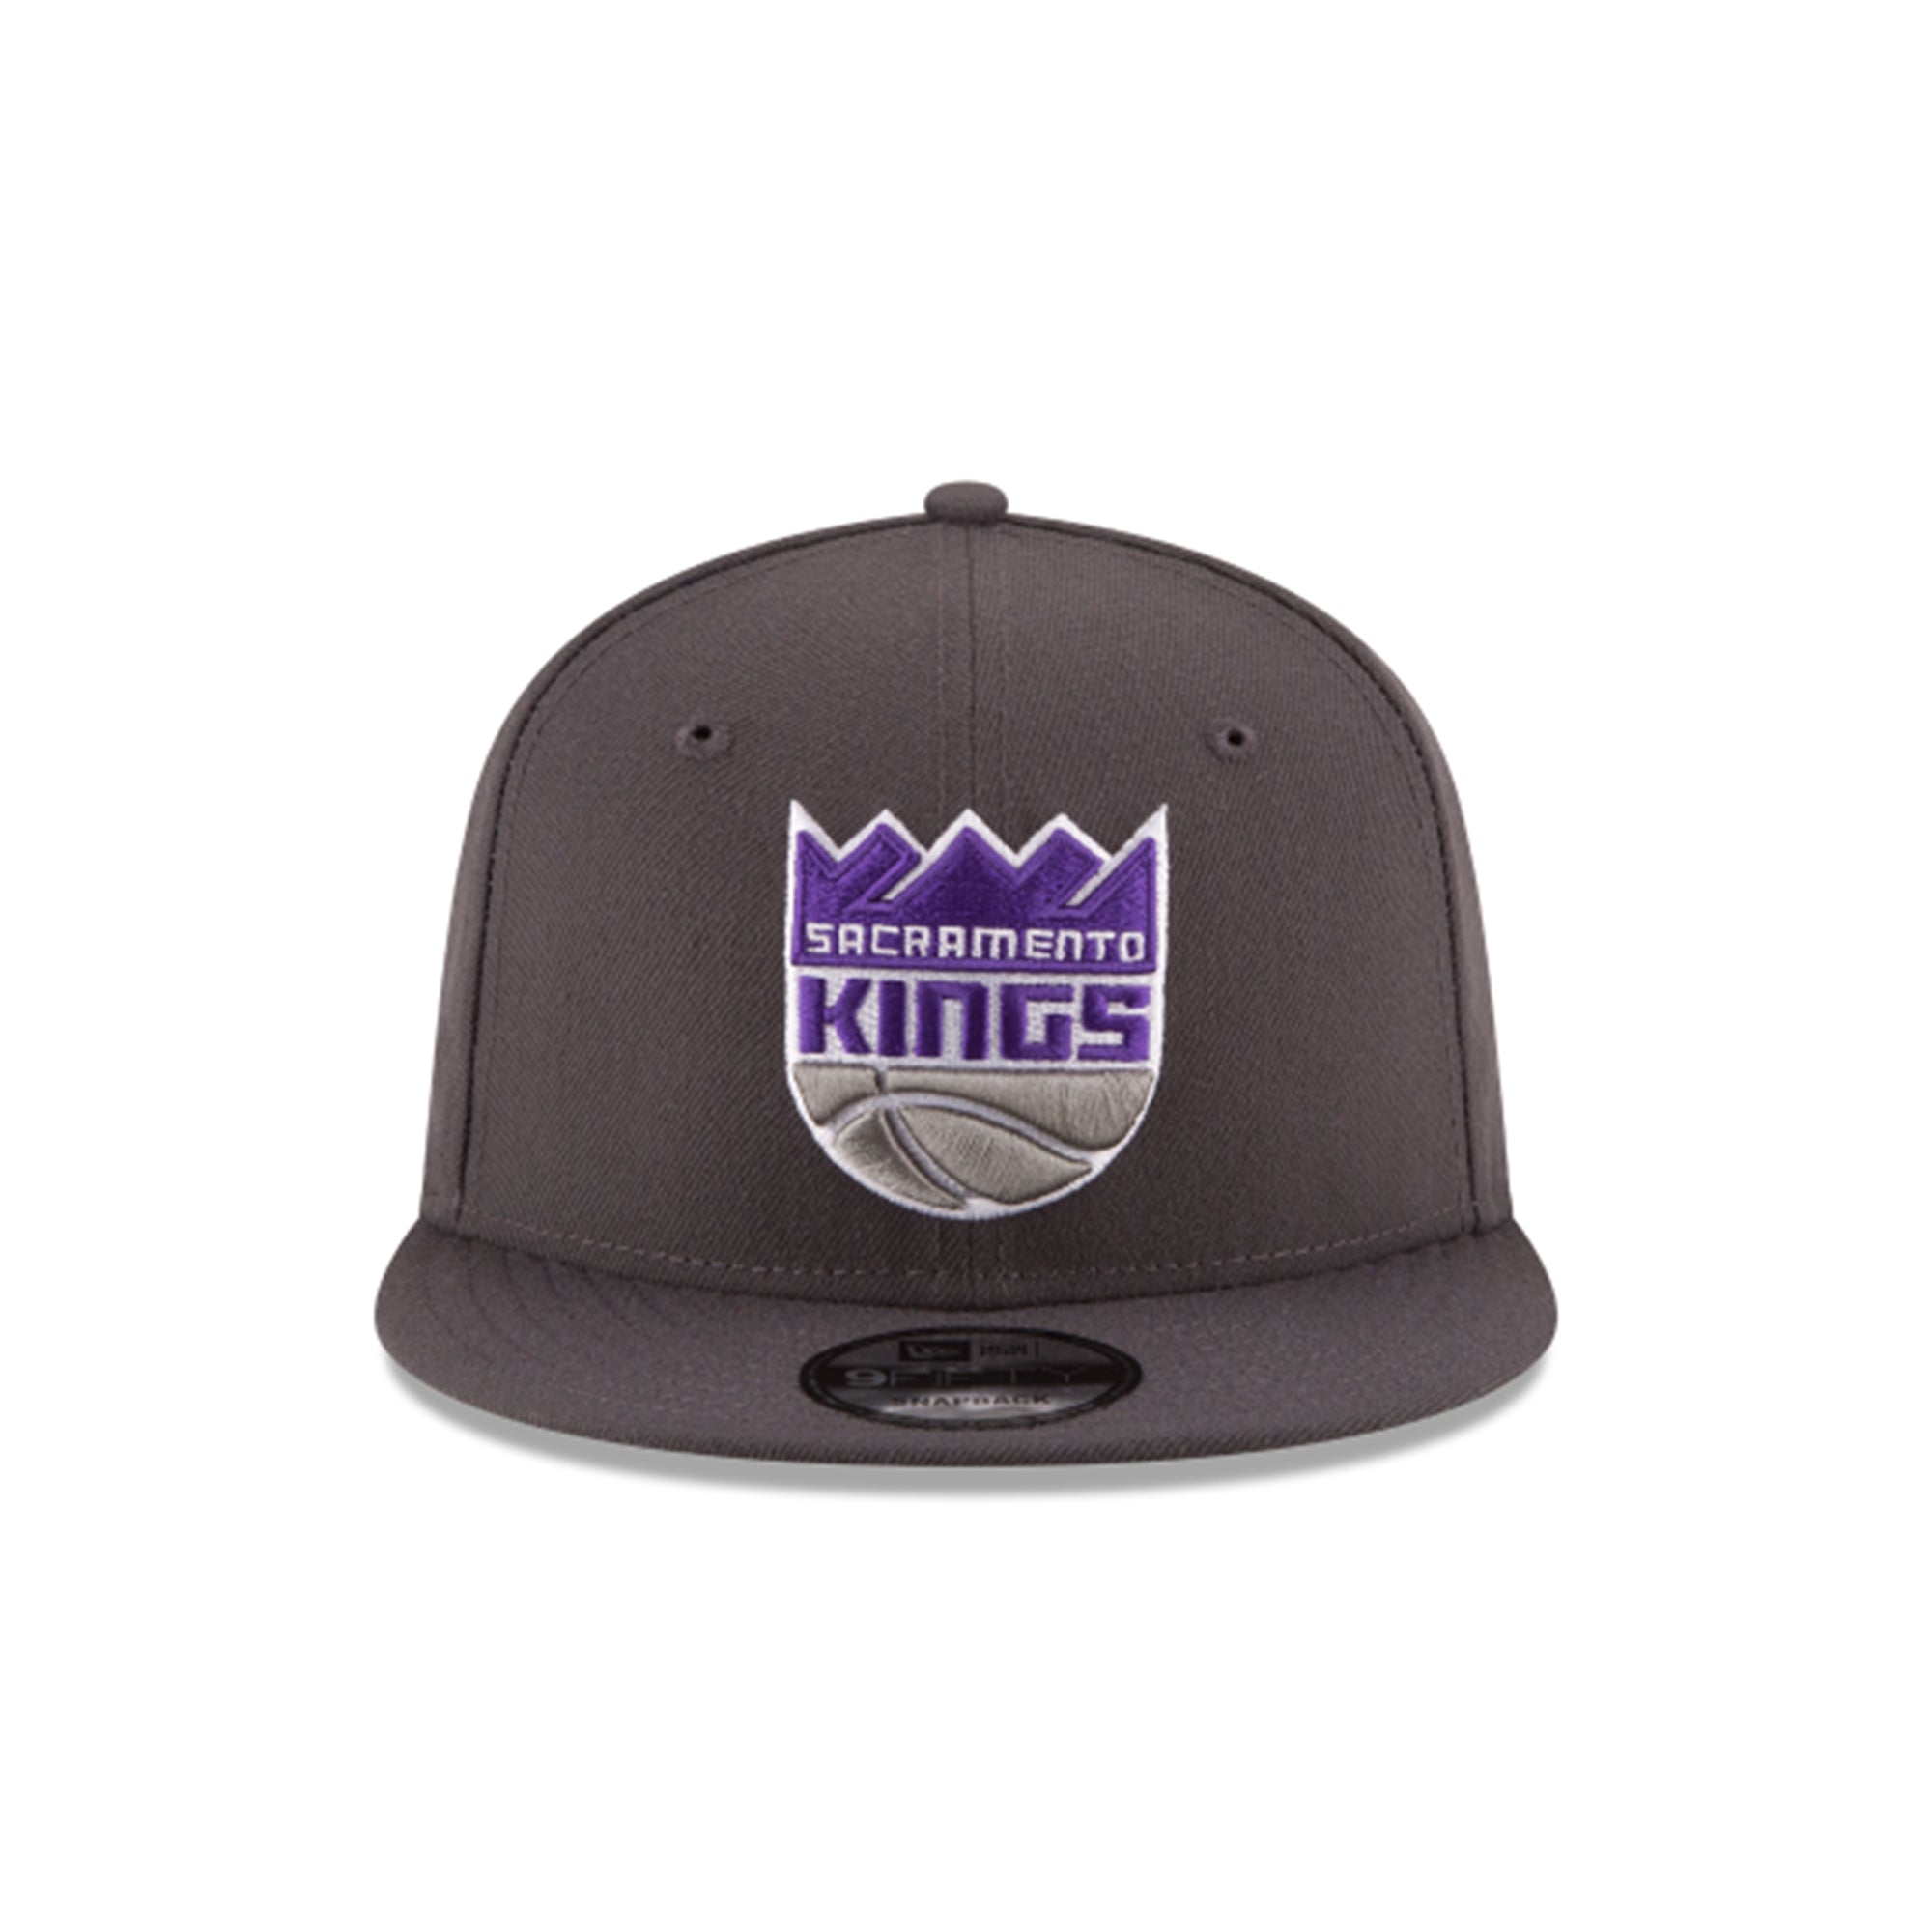 New Era Sacramento Kings Snapback Hat (Gray Purple)4